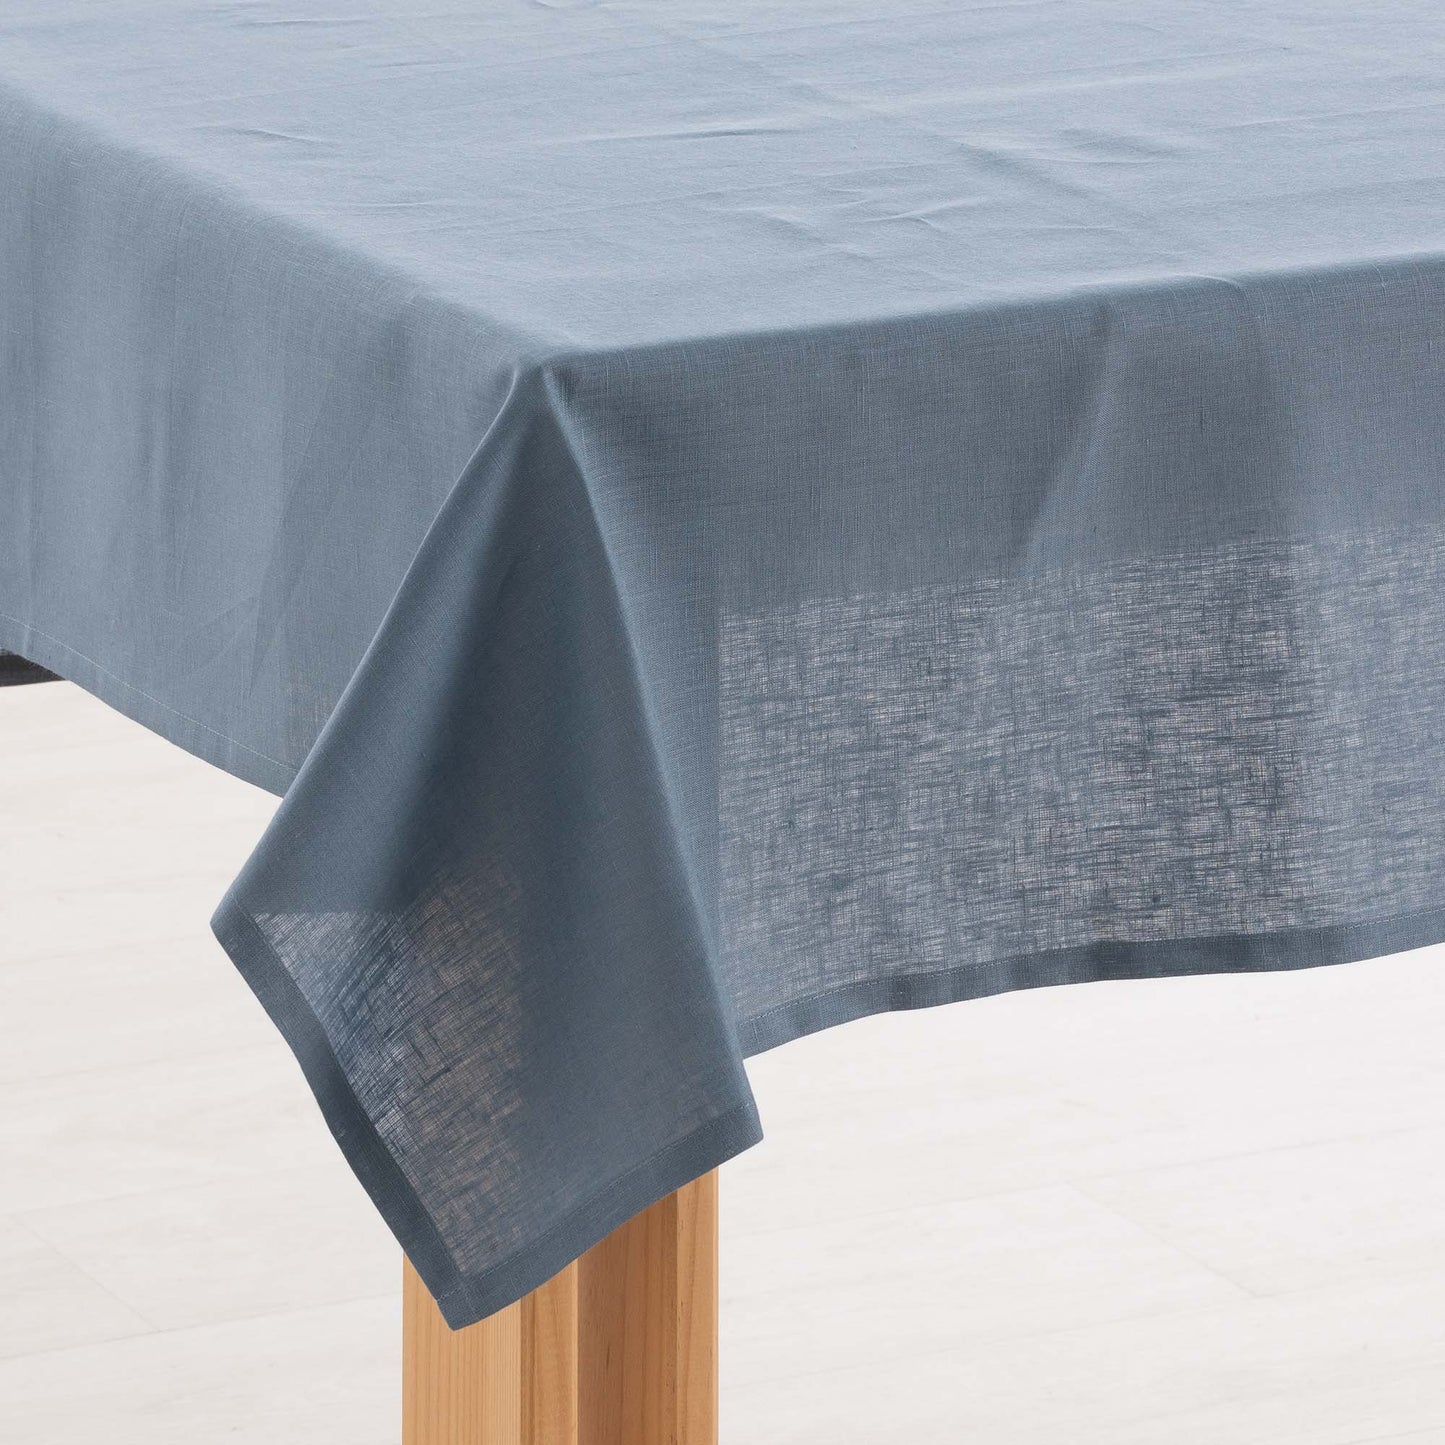 Waterproof stain-resistant tablecloth 100% Linen Denim Blue